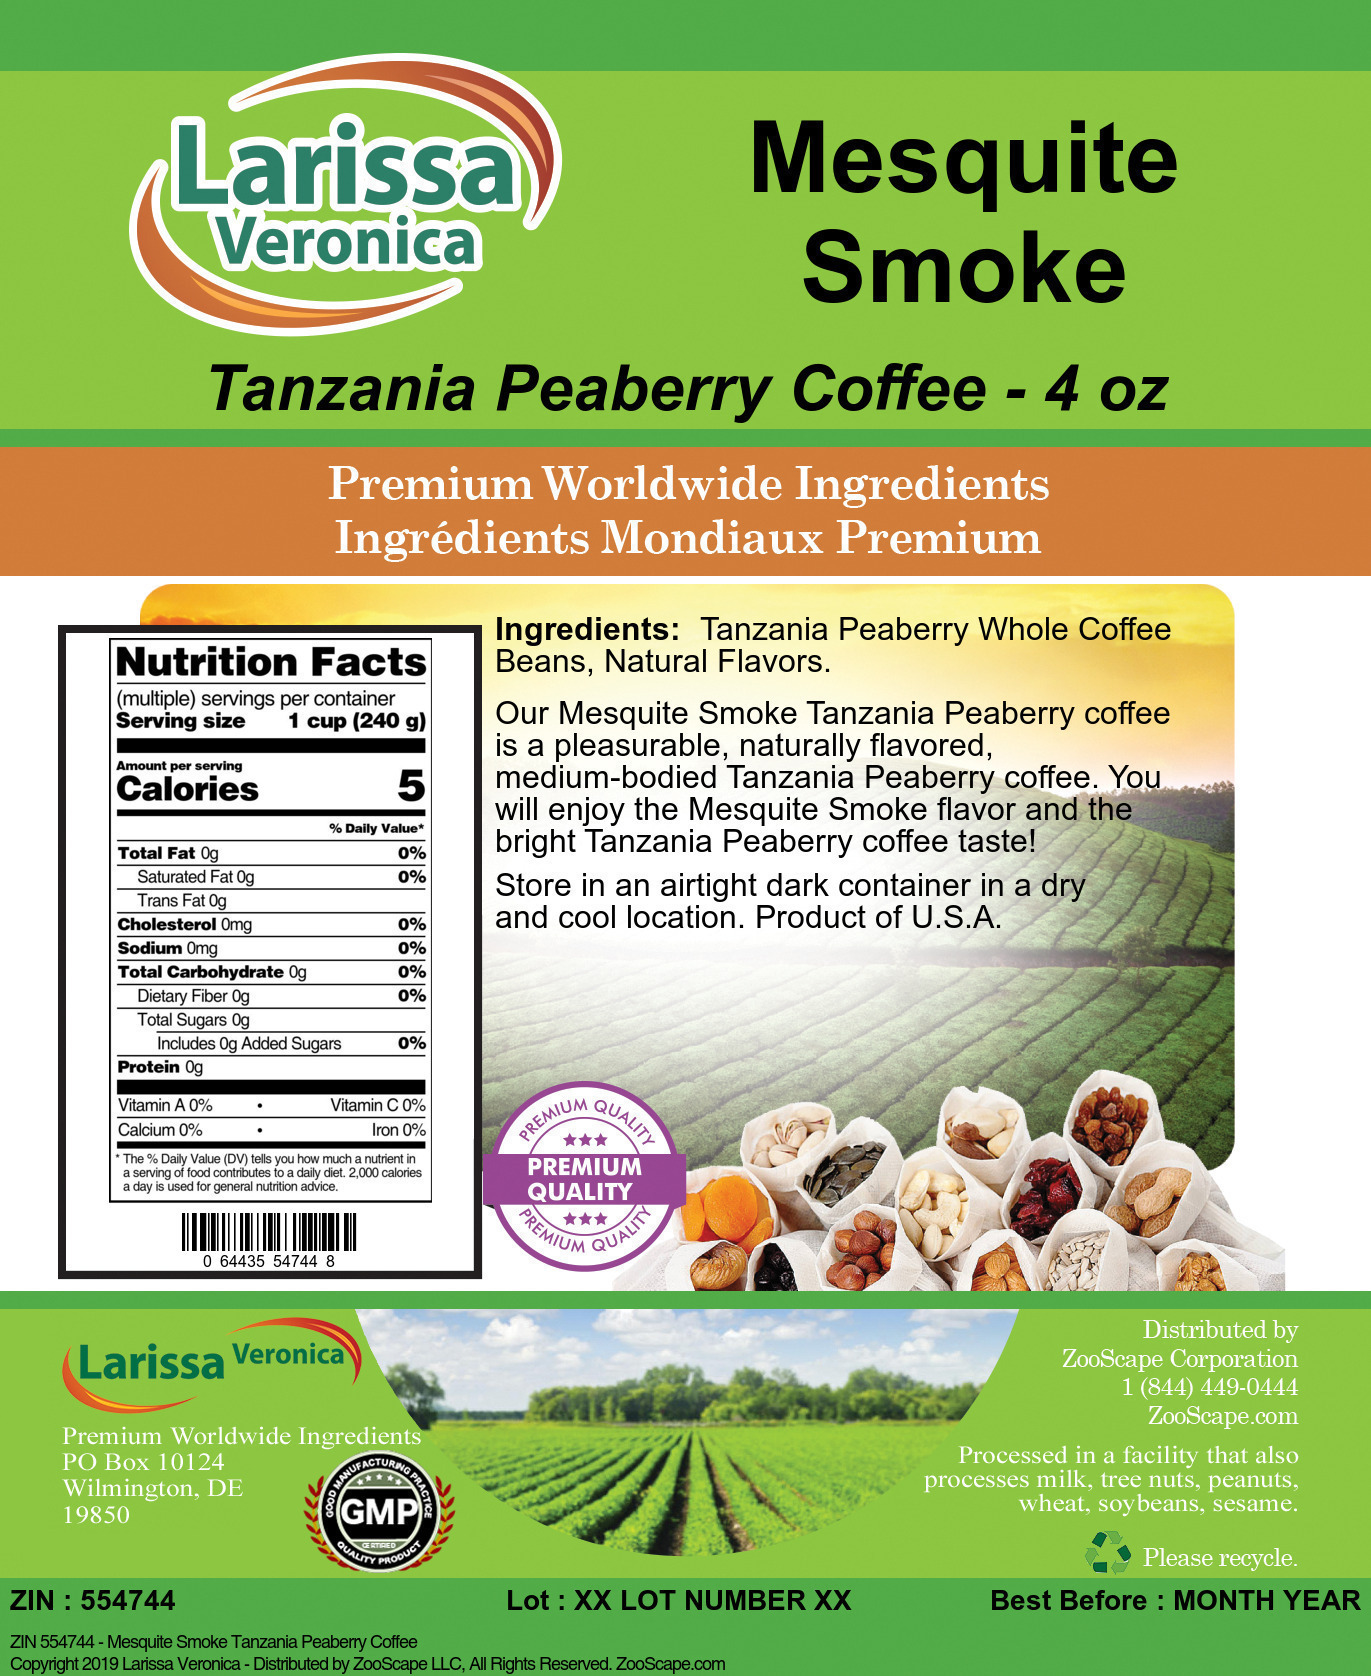 Mesquite Smoke Tanzania Peaberry Coffee - Label